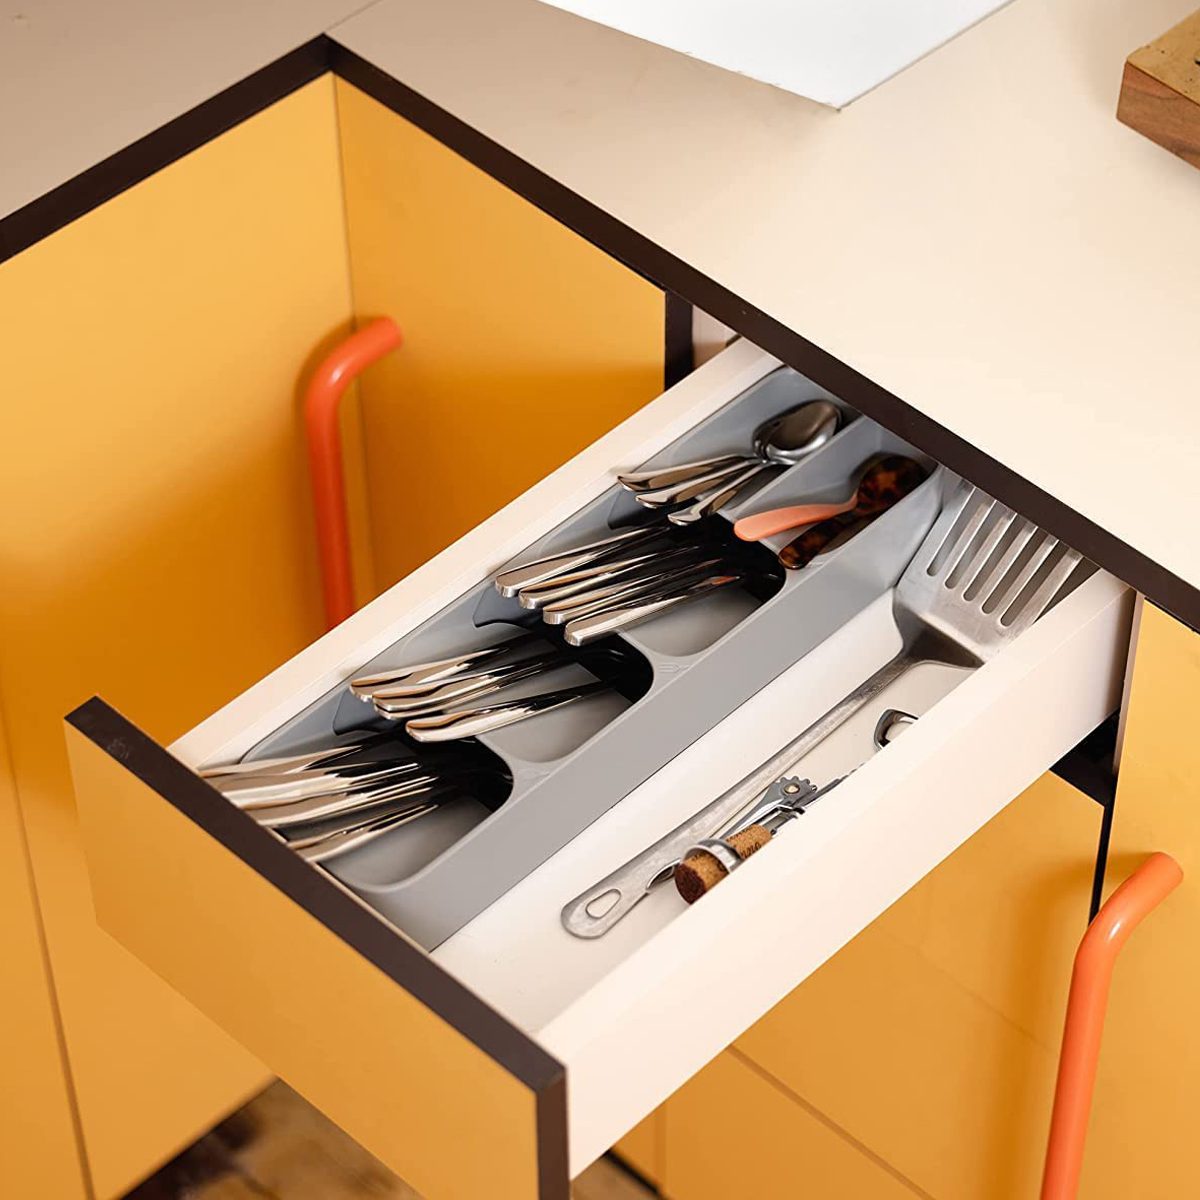 https://www.familyhandyman.com/wp-content/uploads/2020/02/Joseph-DrawerStore-Compact-Cutlery-Organizer-Kitchen-Drawer-Tray_ecomm-amazon.com_.jpg